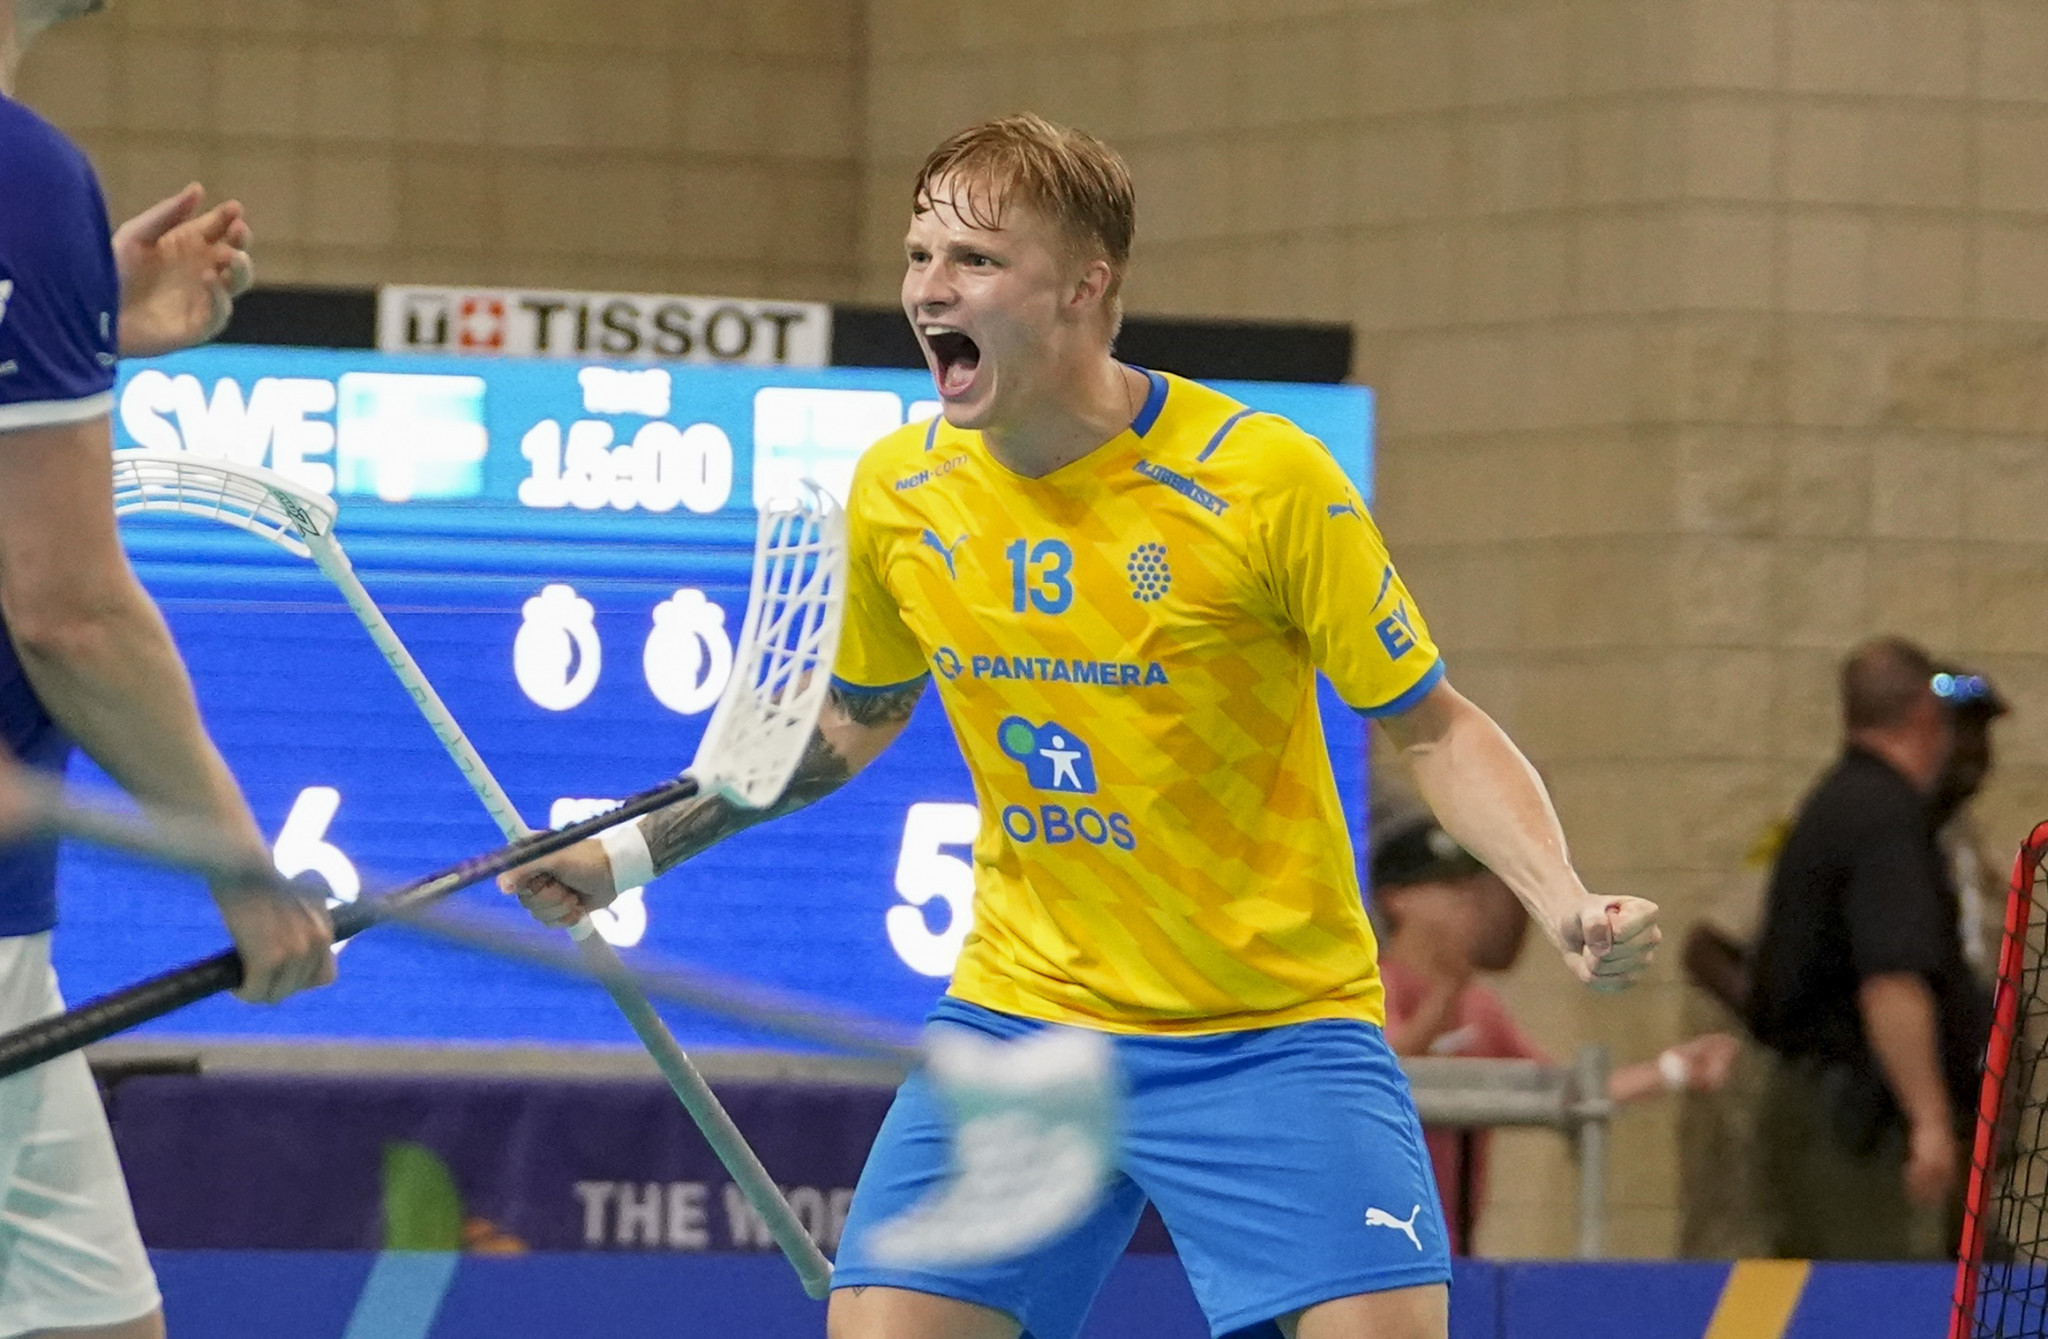 World champions Sweden clinch men's floorball title at Birmingham 2022 World Games